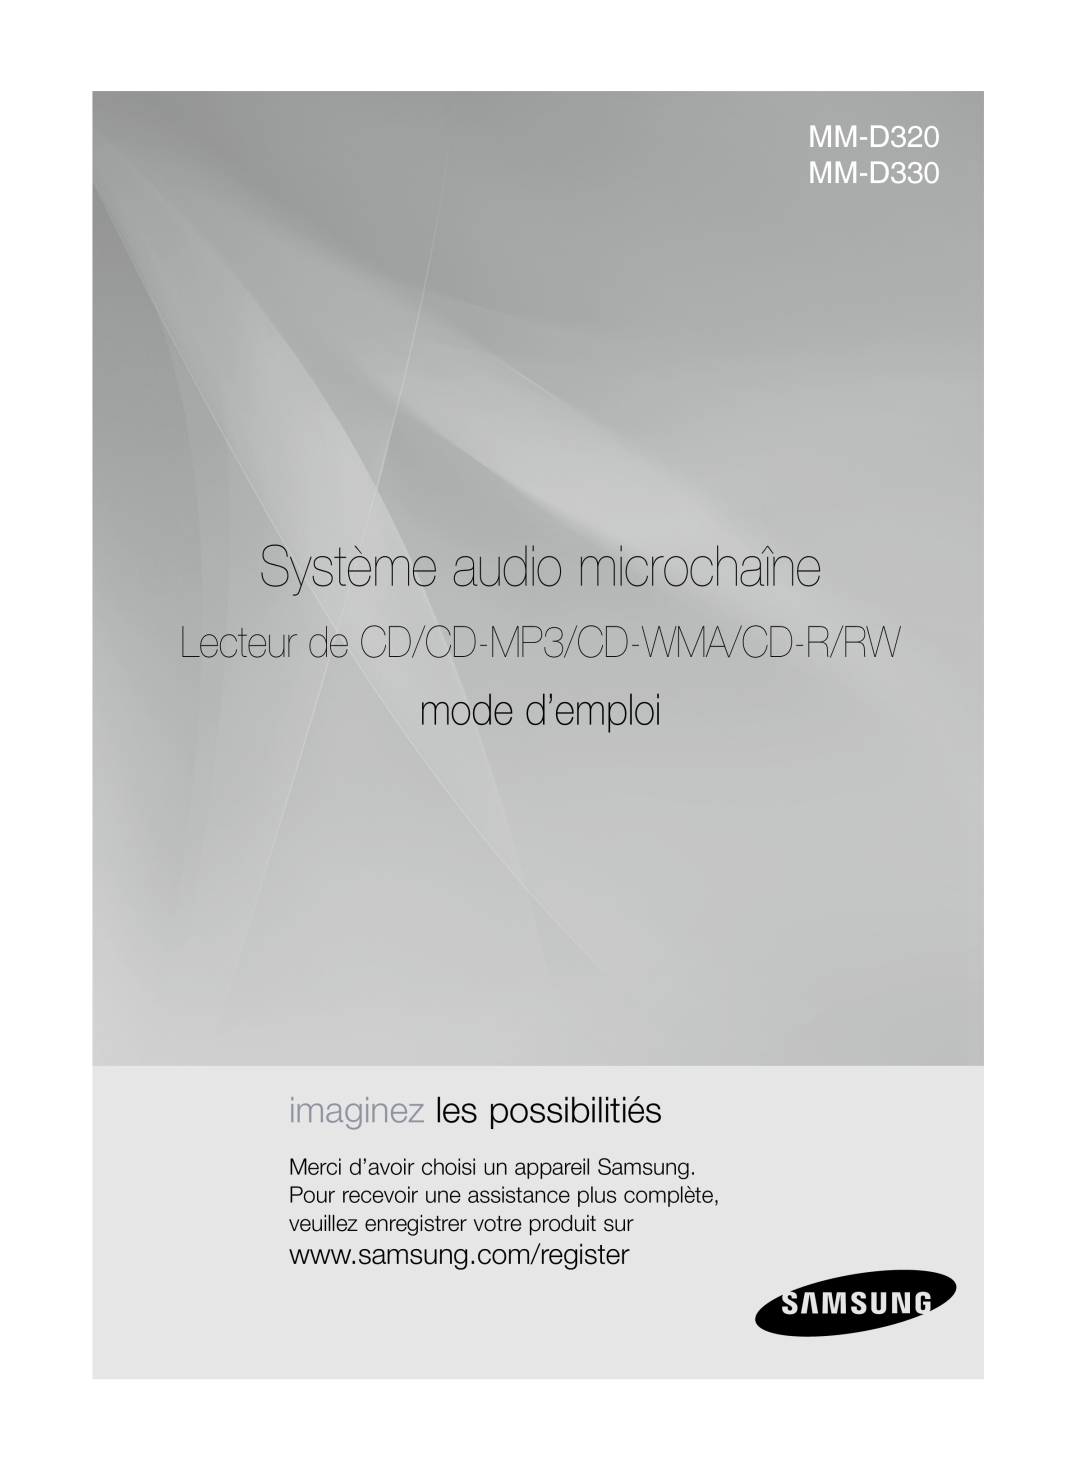 Samsung MM-D320/ZF manual Système audio microchaîne, mode d’emploi, Lecteur de CD/CD-MP3/CD-WMA/CD-R/RW, MM-D320 MM-D330 